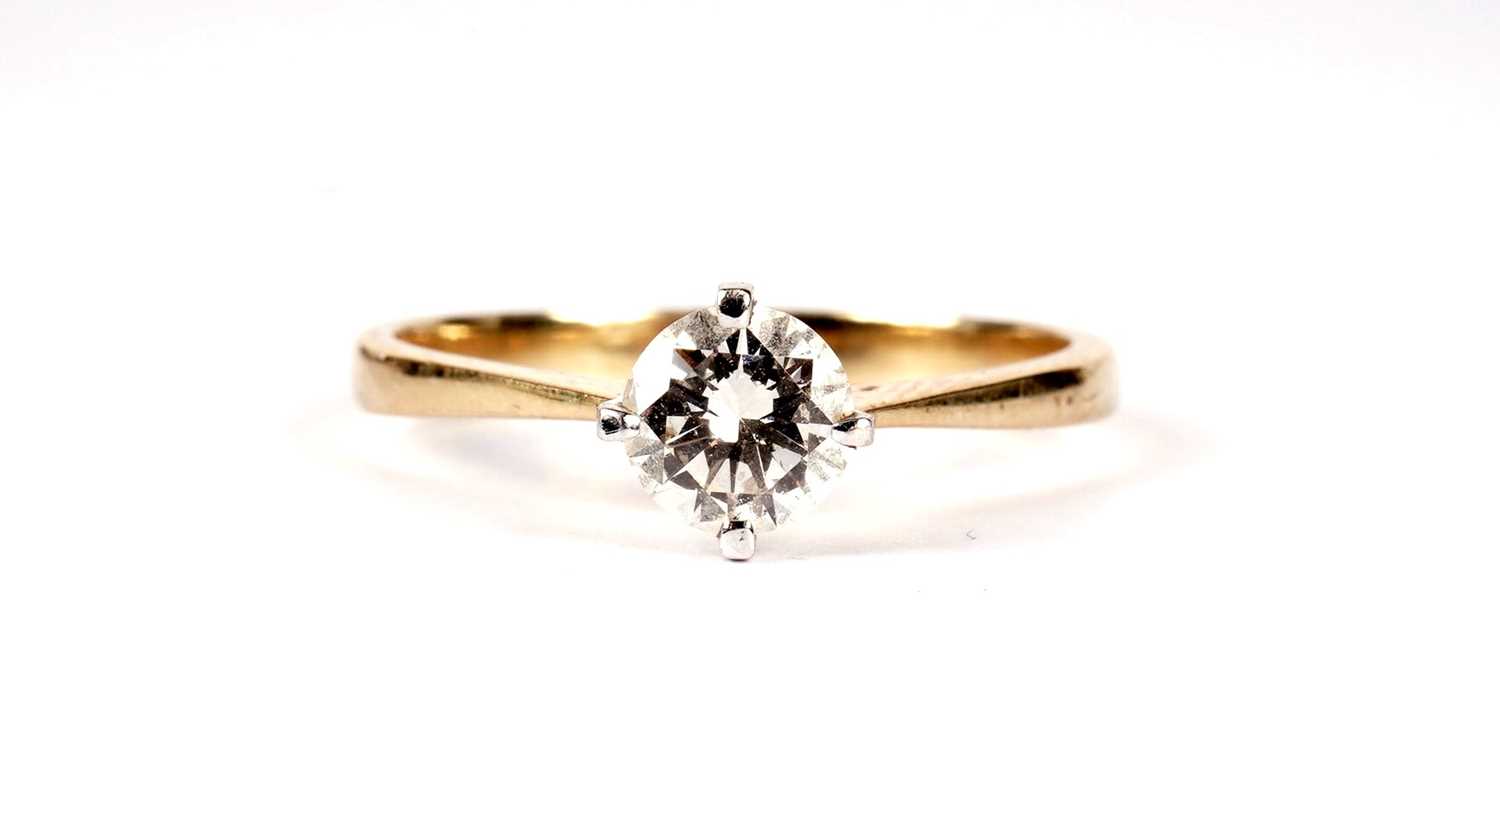 Lot 1224 - A single stone solitaire diamond ring